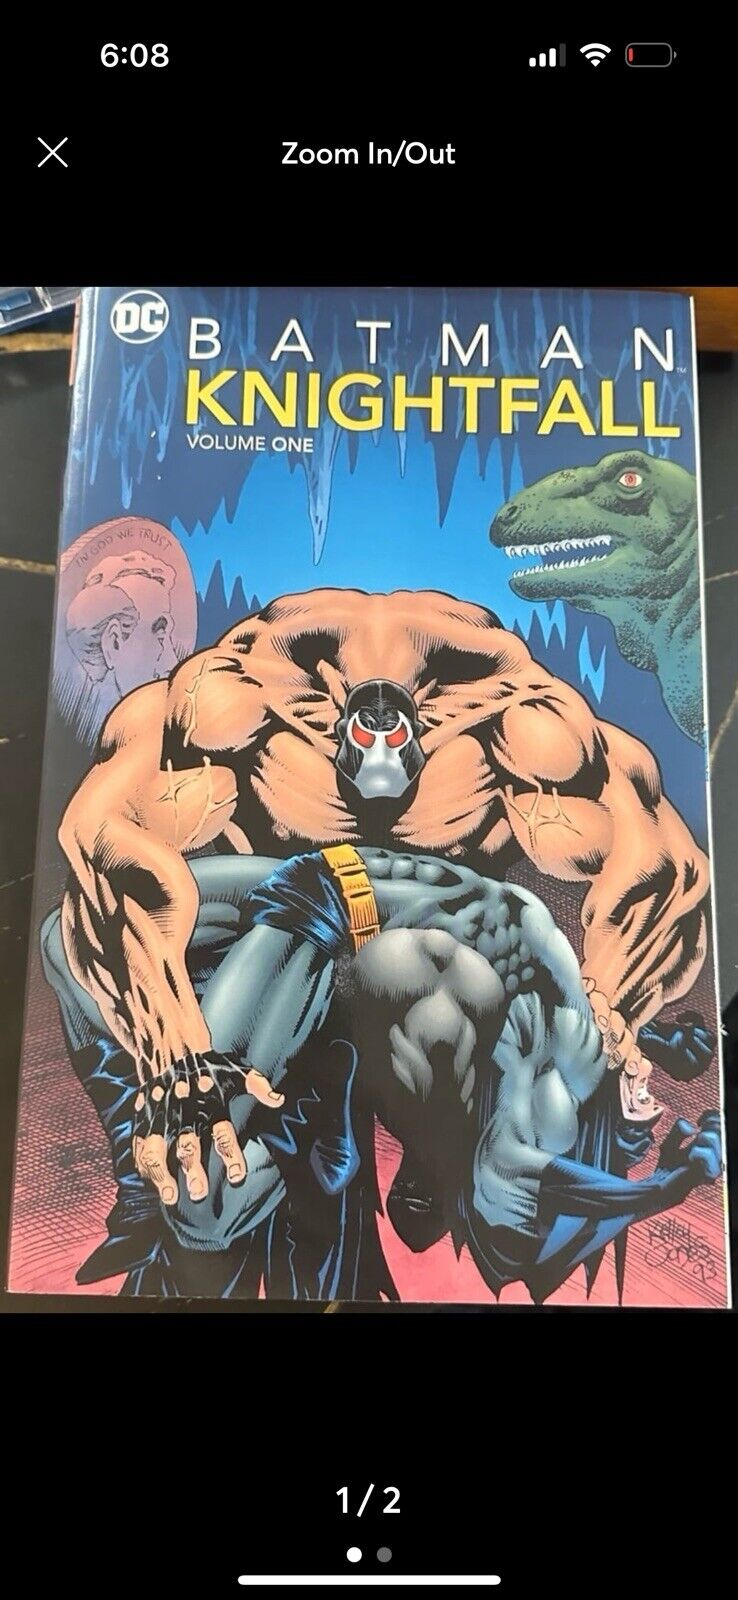 Batman Knightfall Vol. 1 by D C Comics 2012 Trade Paperback